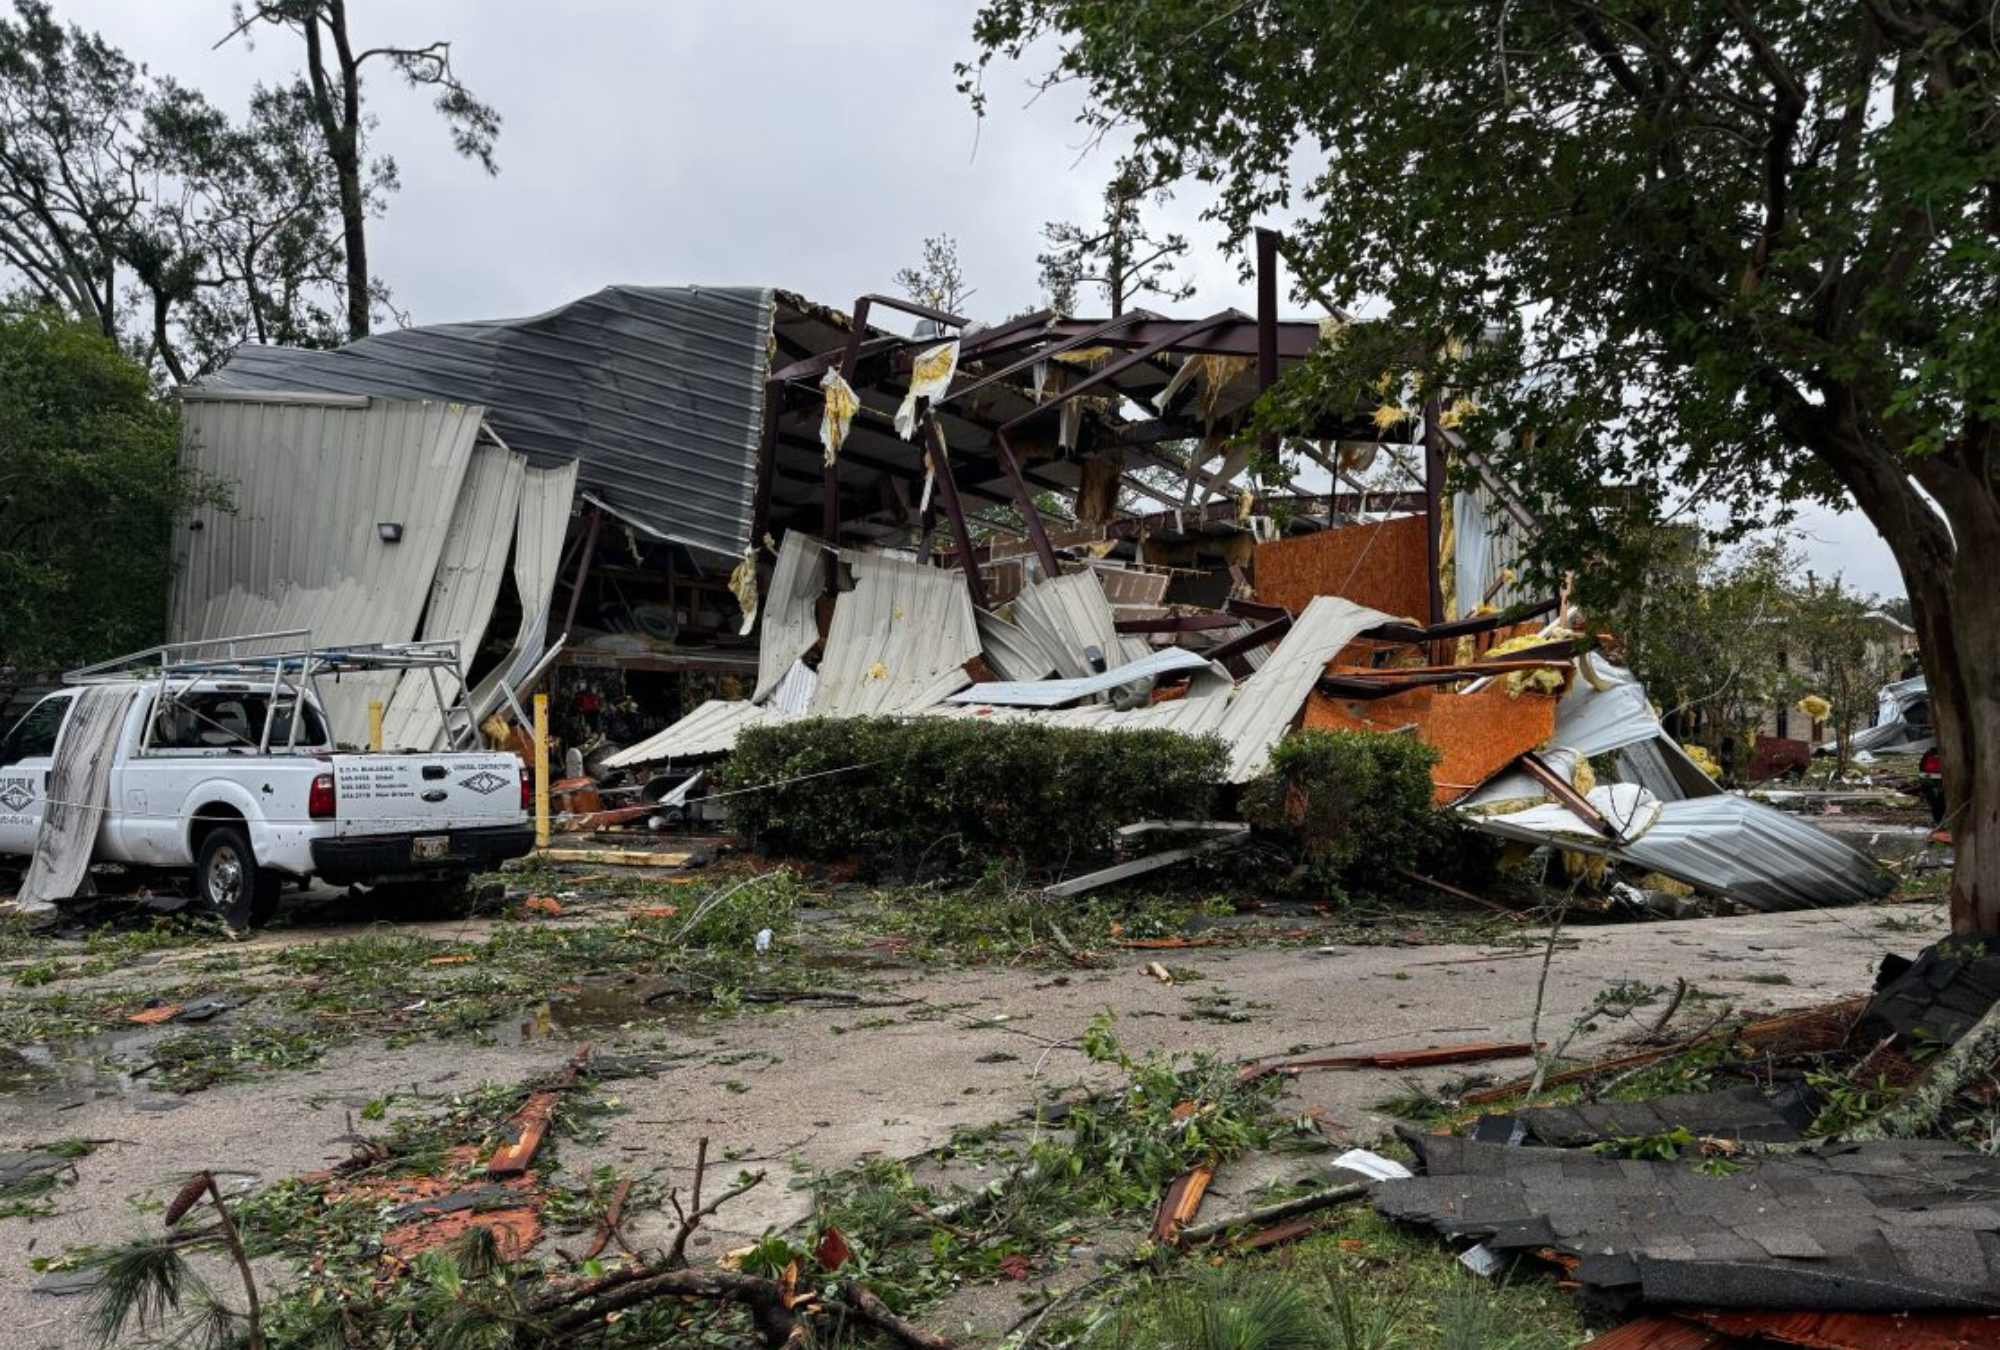 Videos Capture Tornado Destruction in Louisiana